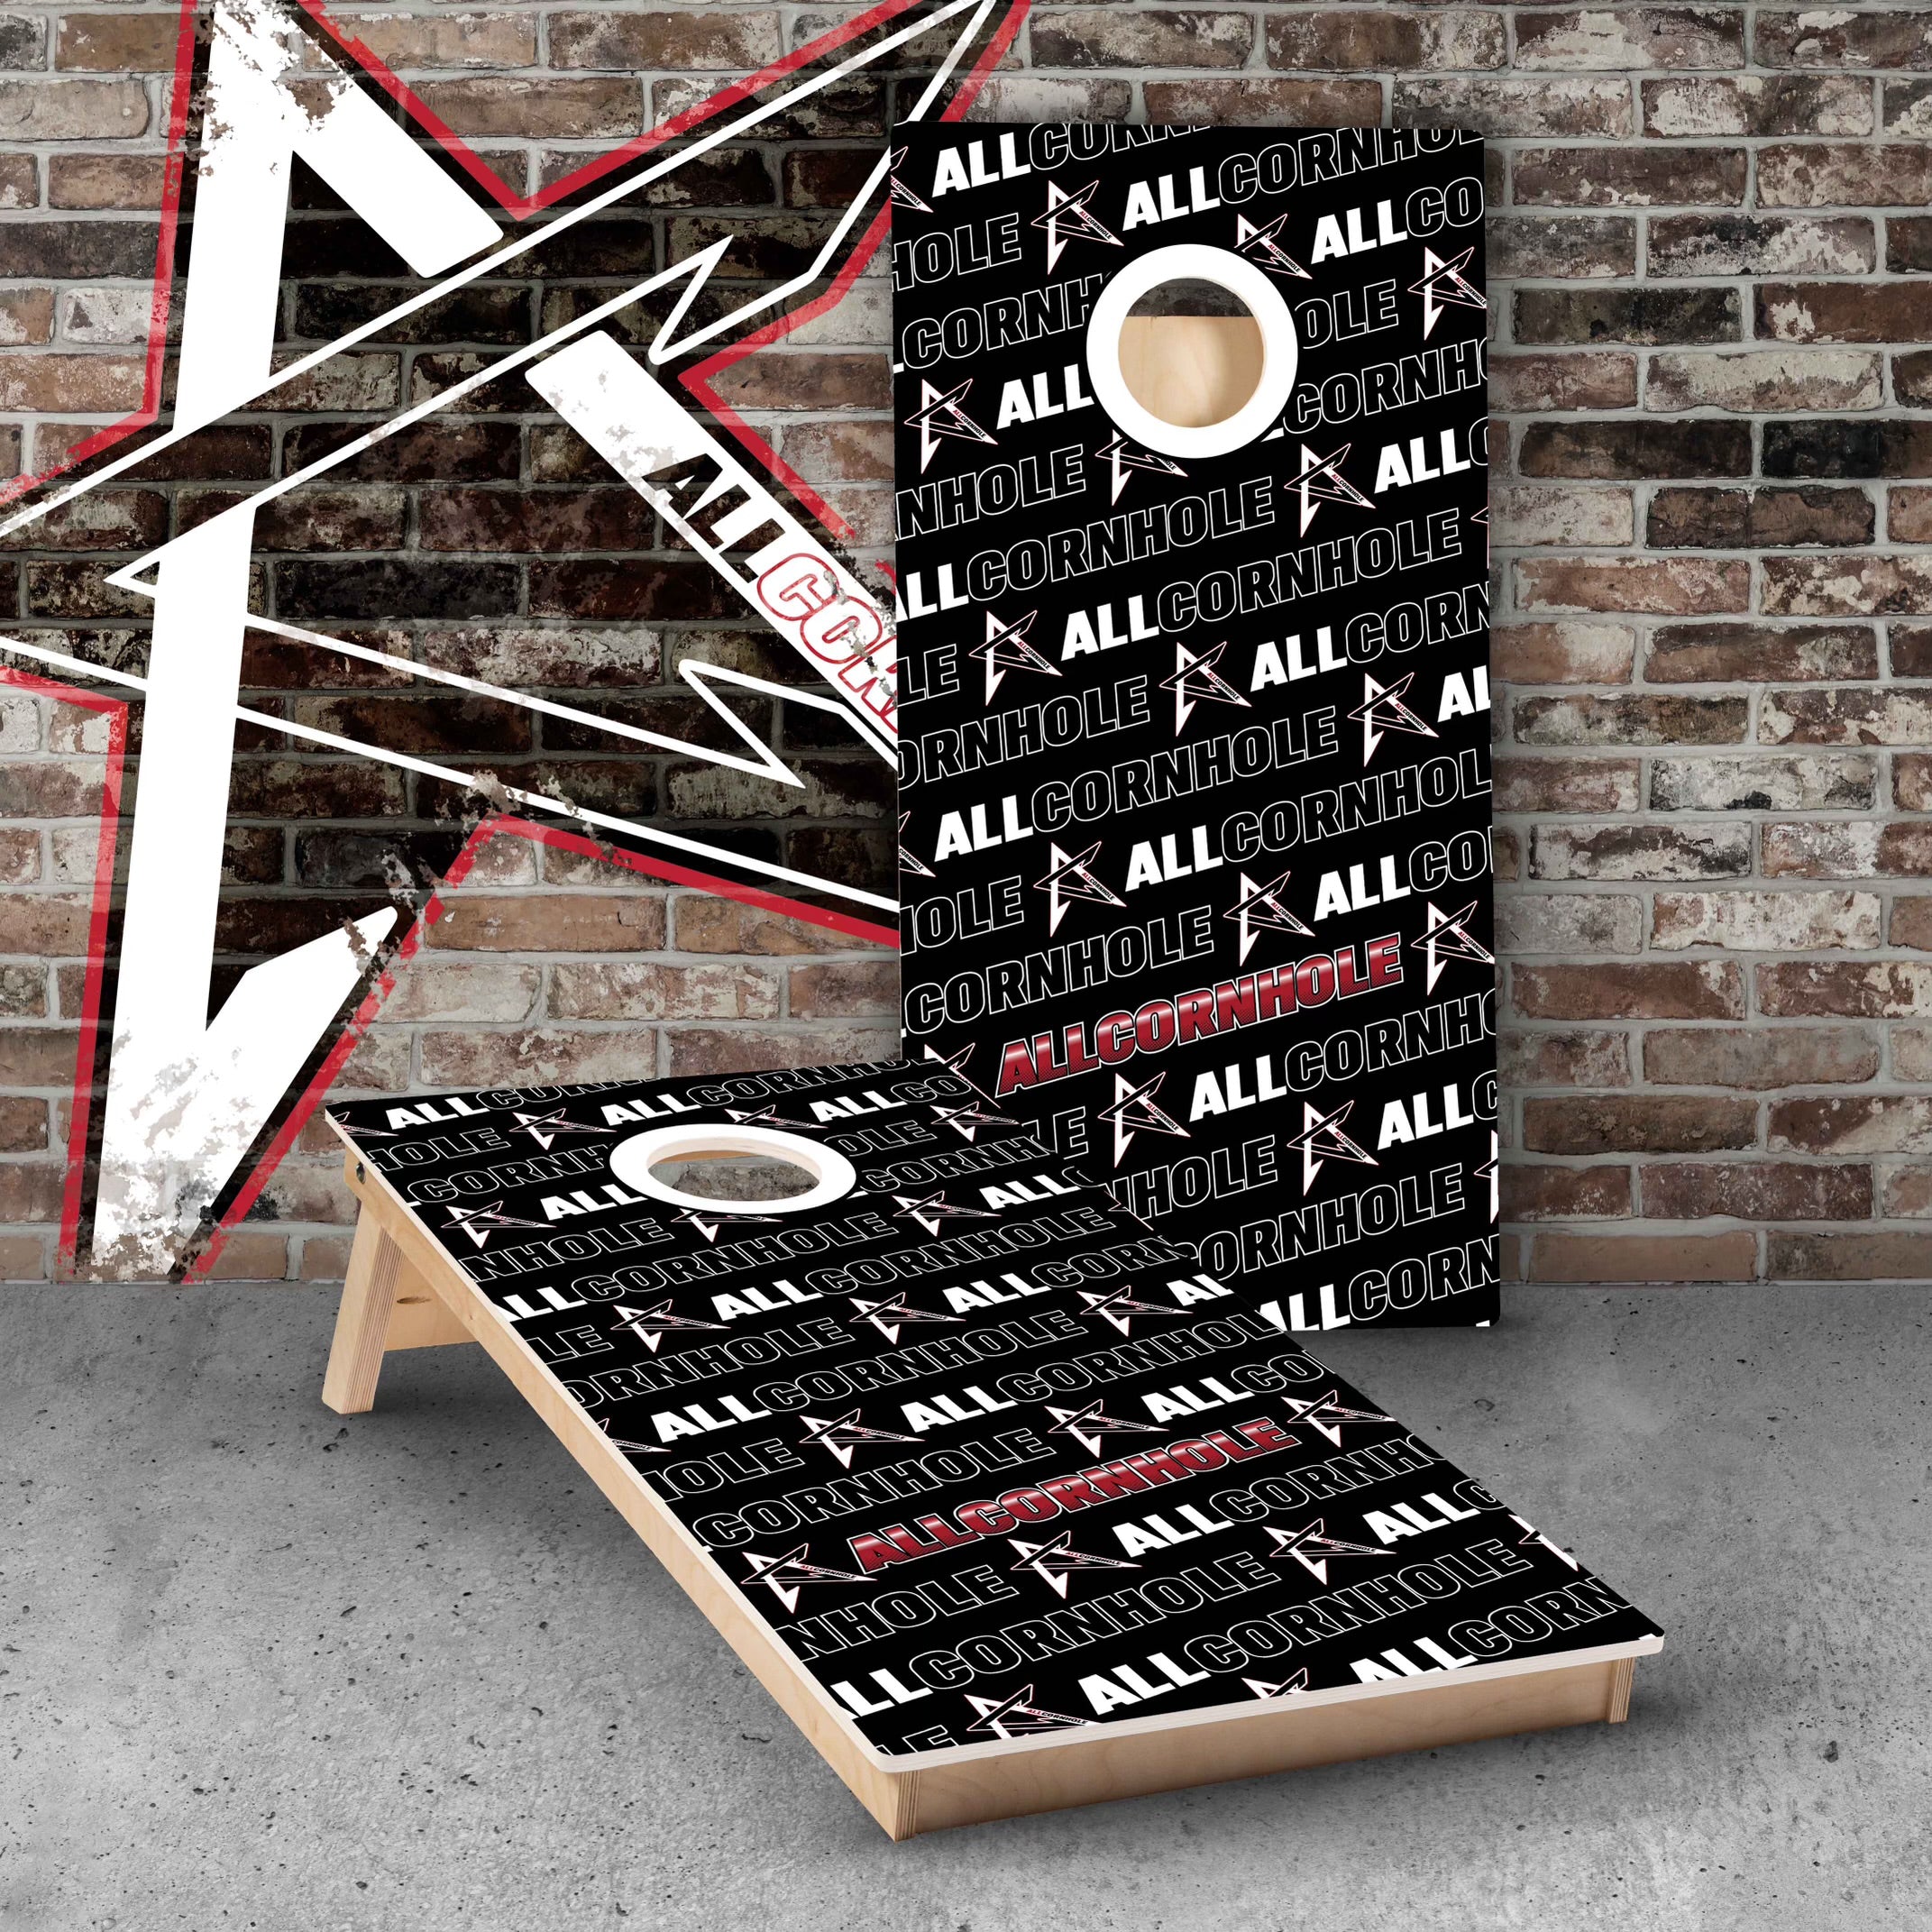 AllCornhole "Black Label" Boards- Multiple Models